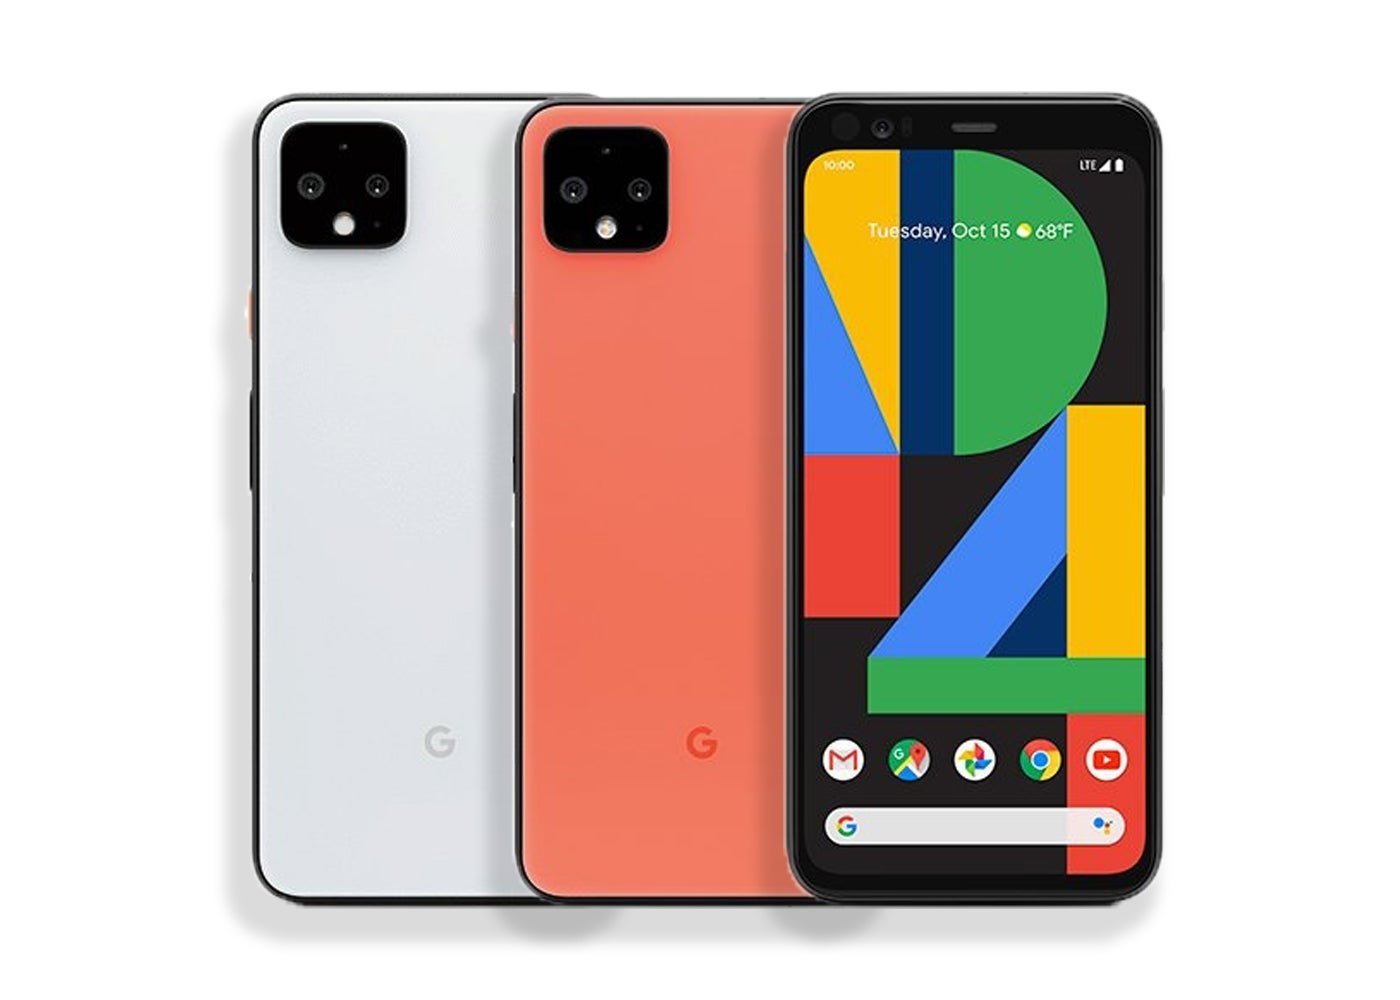 Google Pixel 4 y Pixel 4 XL